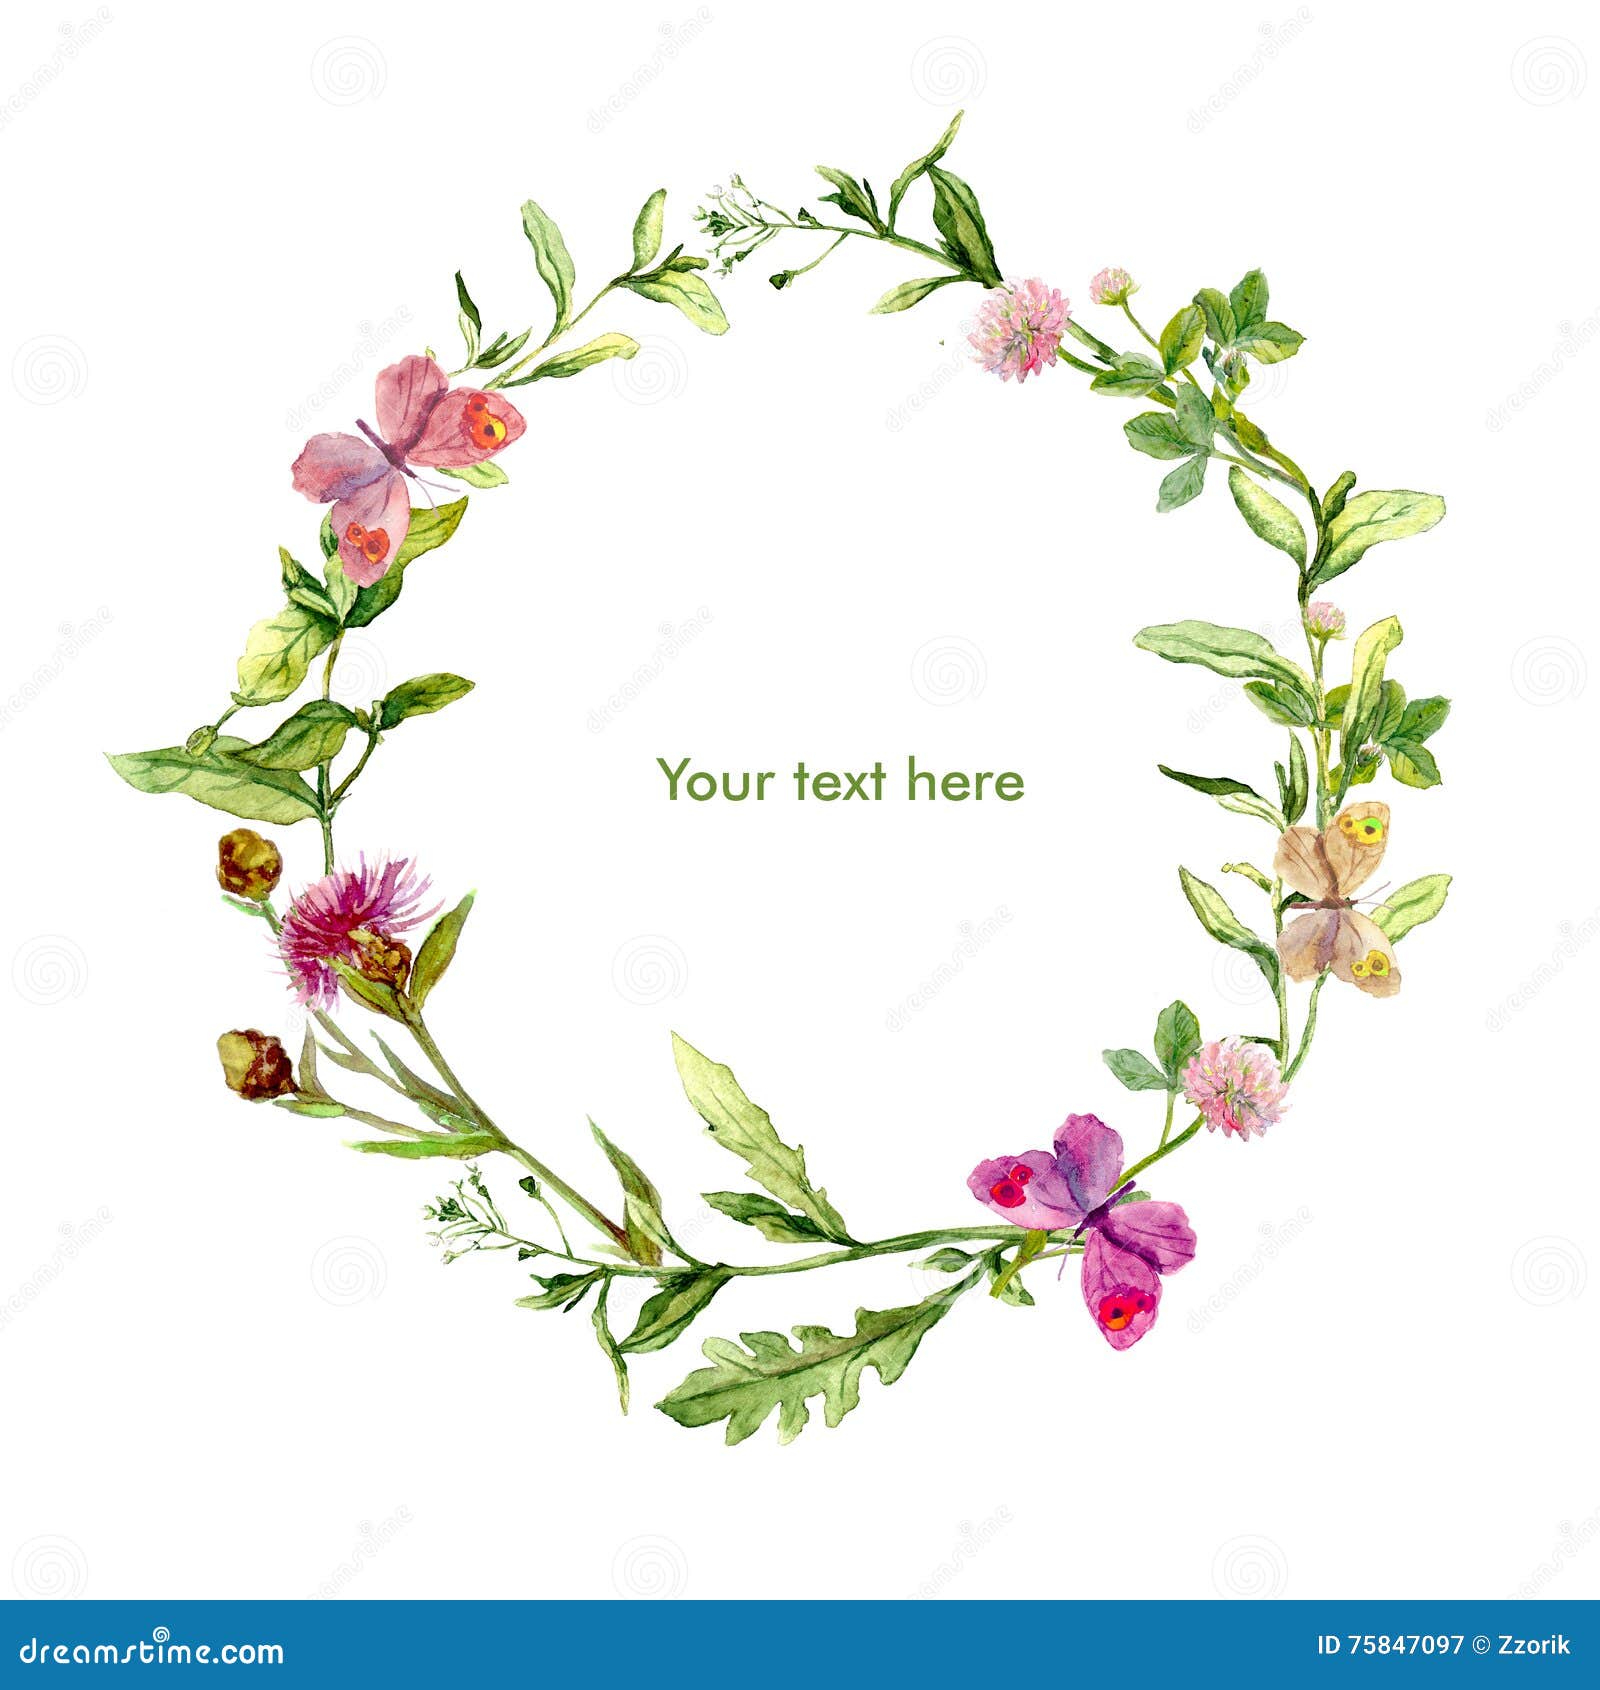 wreath border frame with wild herbs, meadow flowers, butterflies. watercolour